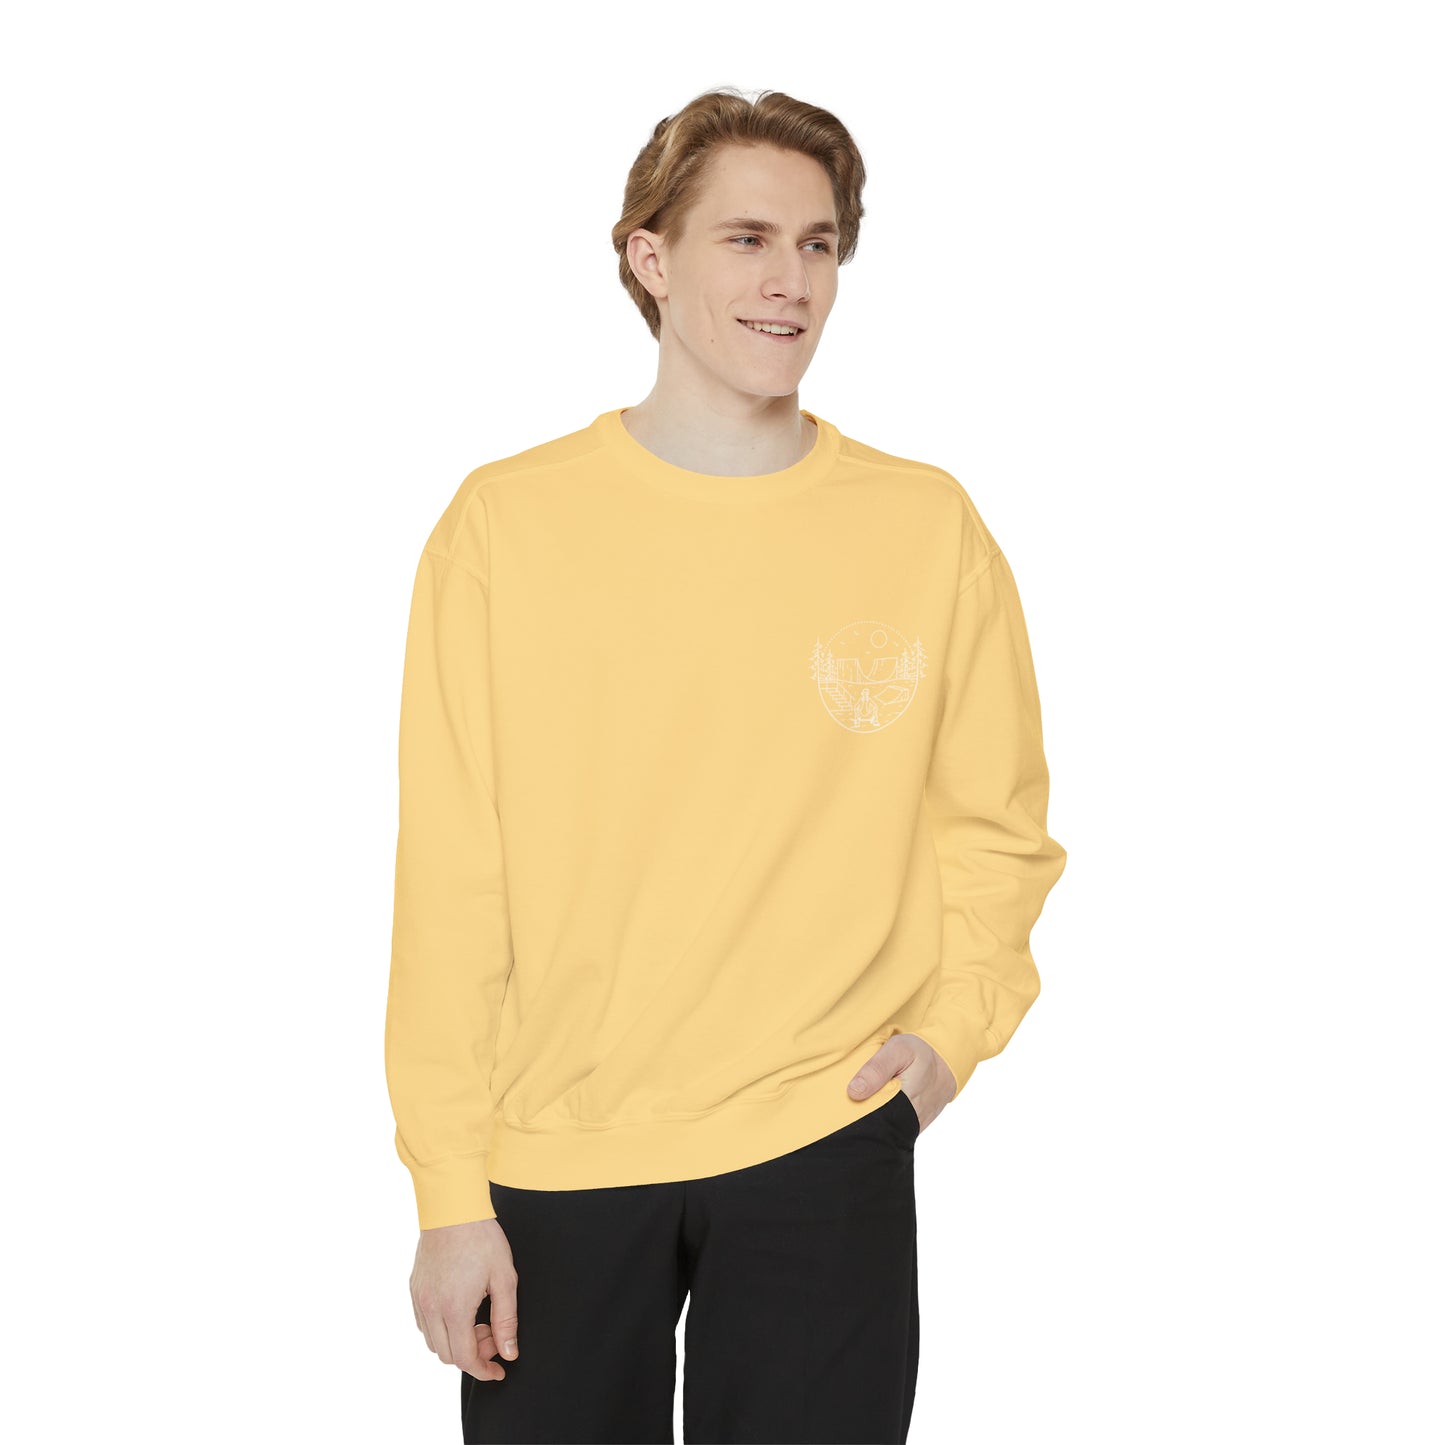 Skater 2 - wht - Unisex Garment-Dyed Sweatshirt